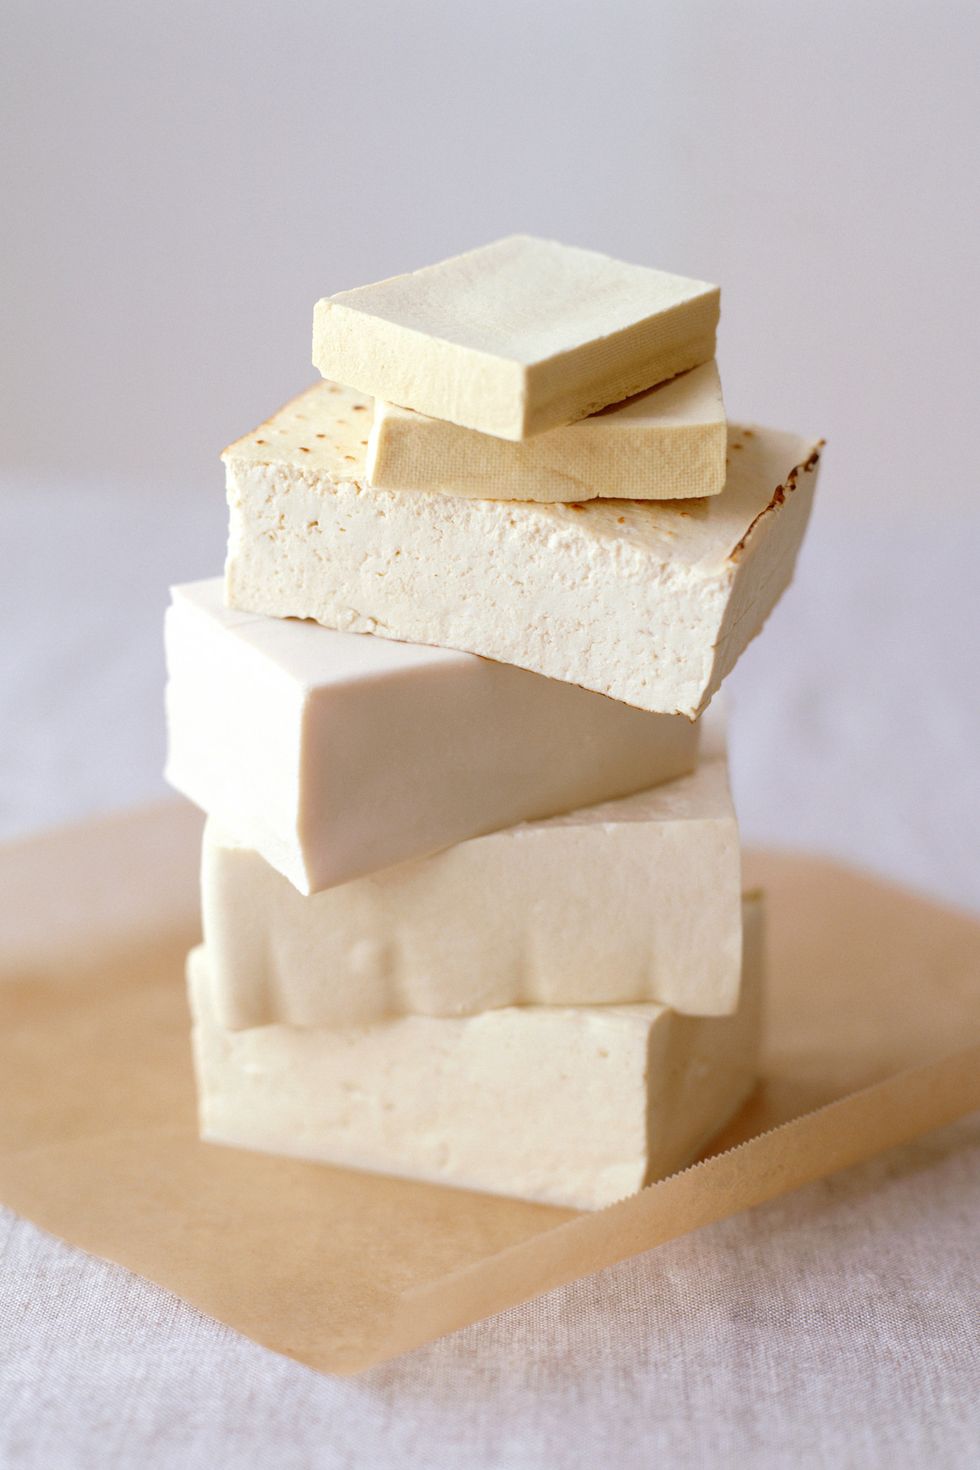 blocks of tofu arranged in stack